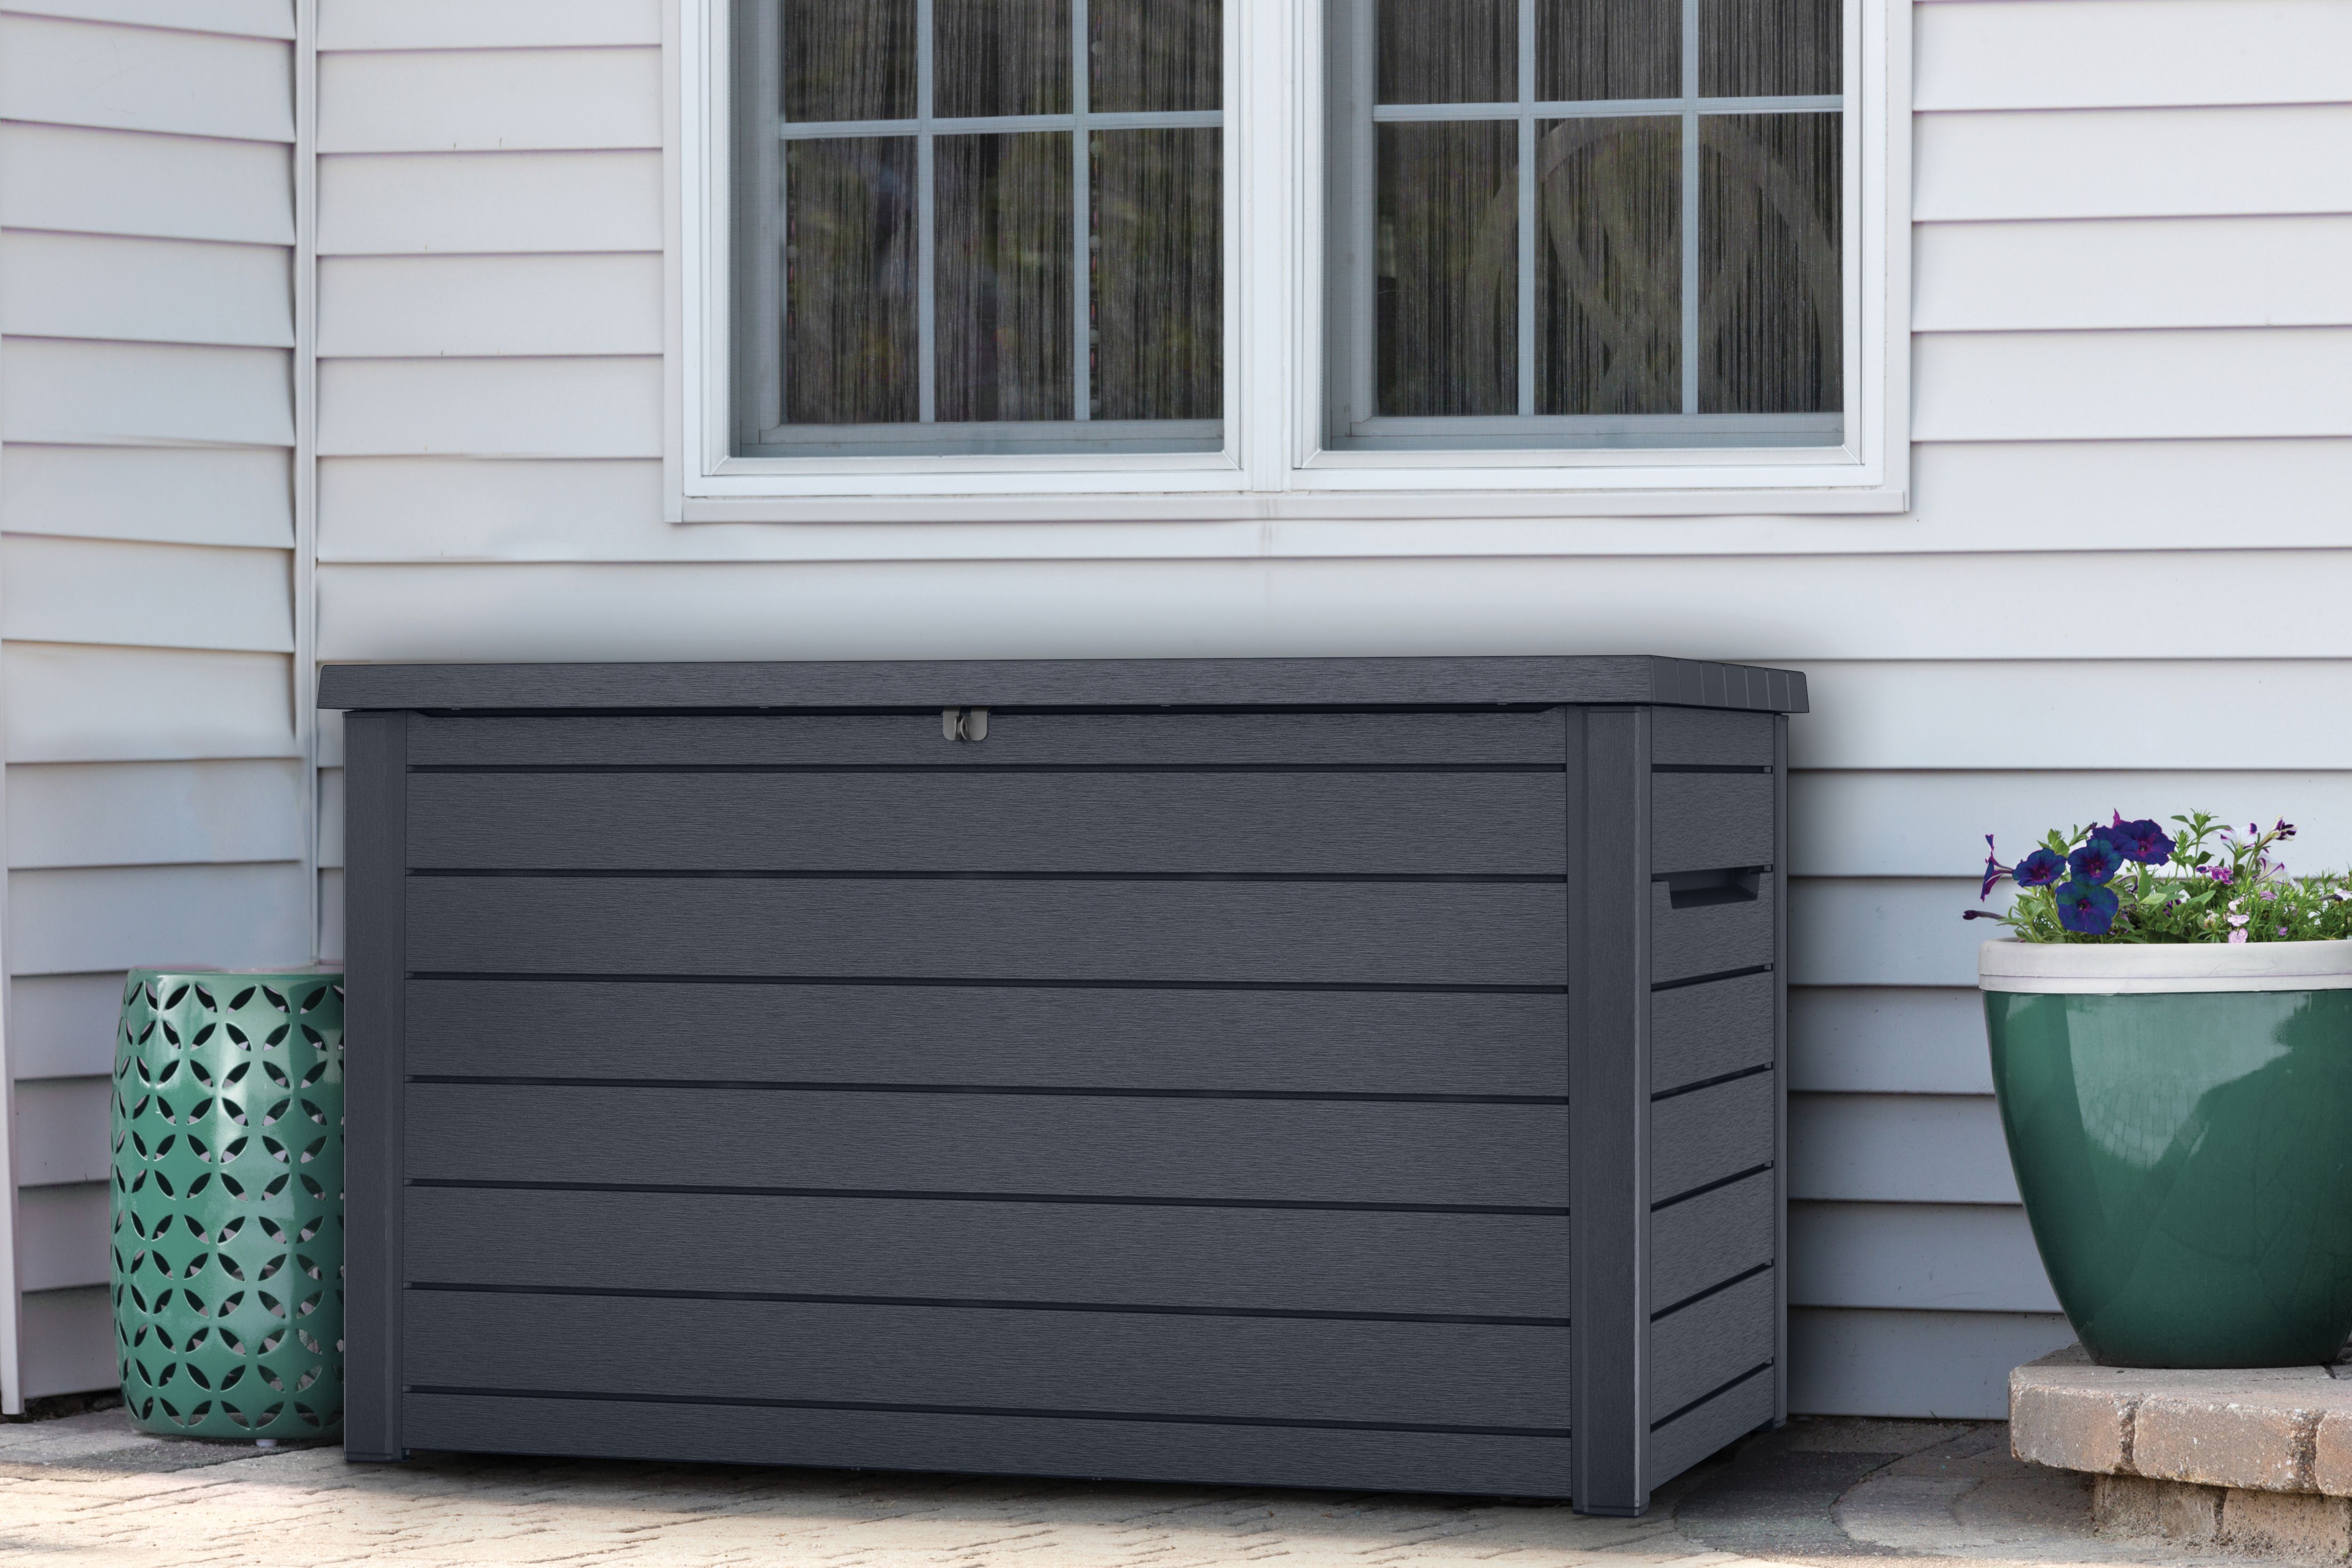 Image of Keter Ontario 870L Outdoor Garden Storage Box - Graphite